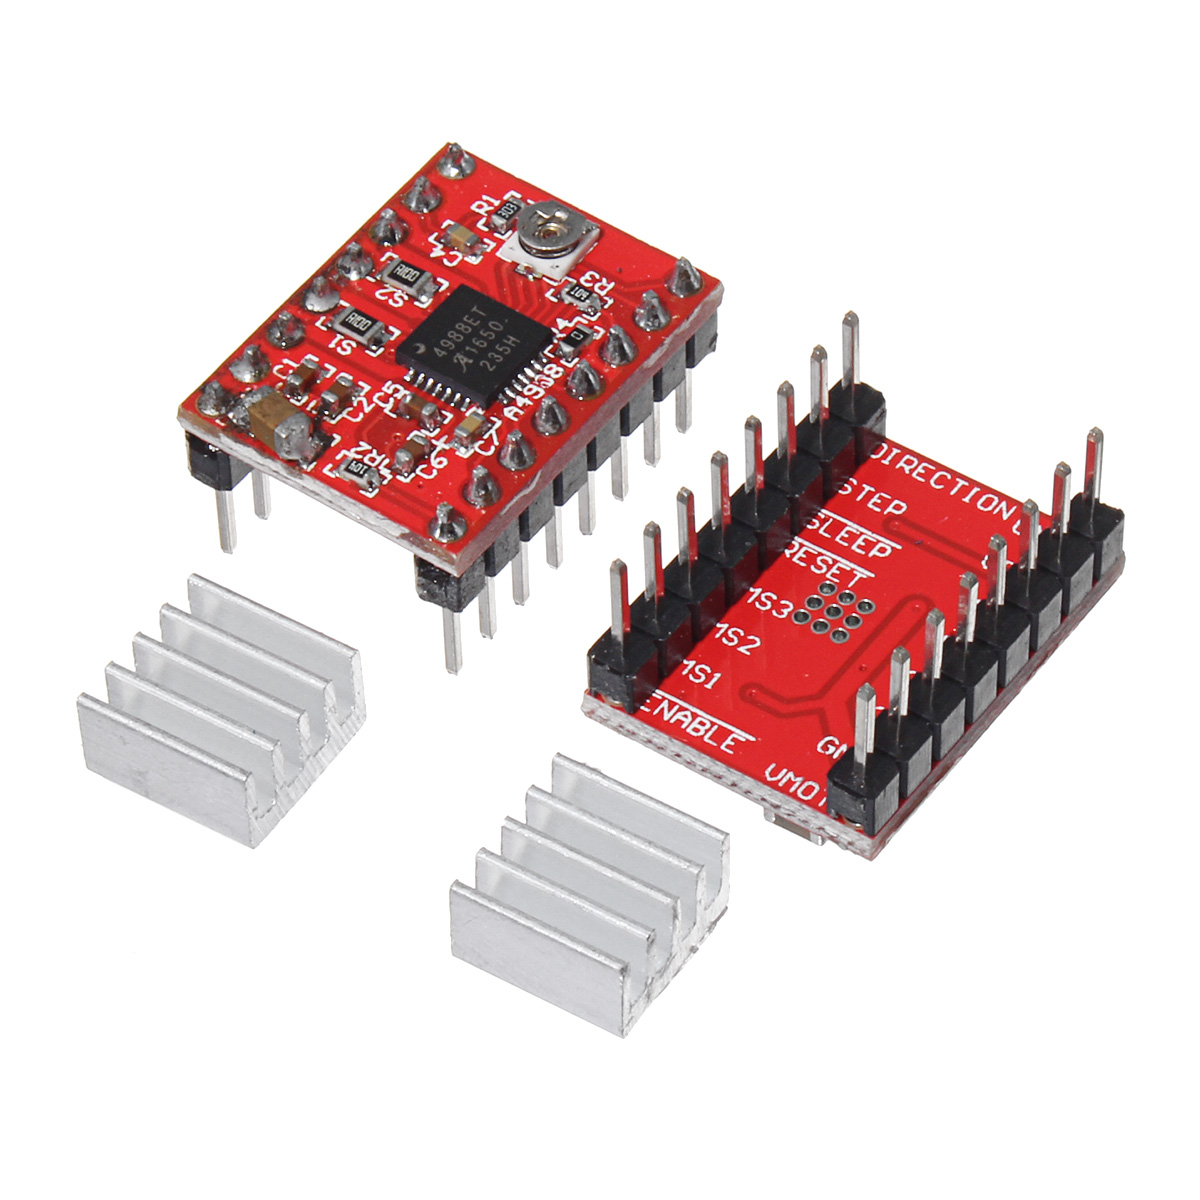 3-Axis--USB-CNC-Arduino-Nano-Controller-A4988-Stepper-Motor-Driver-Board-1163341